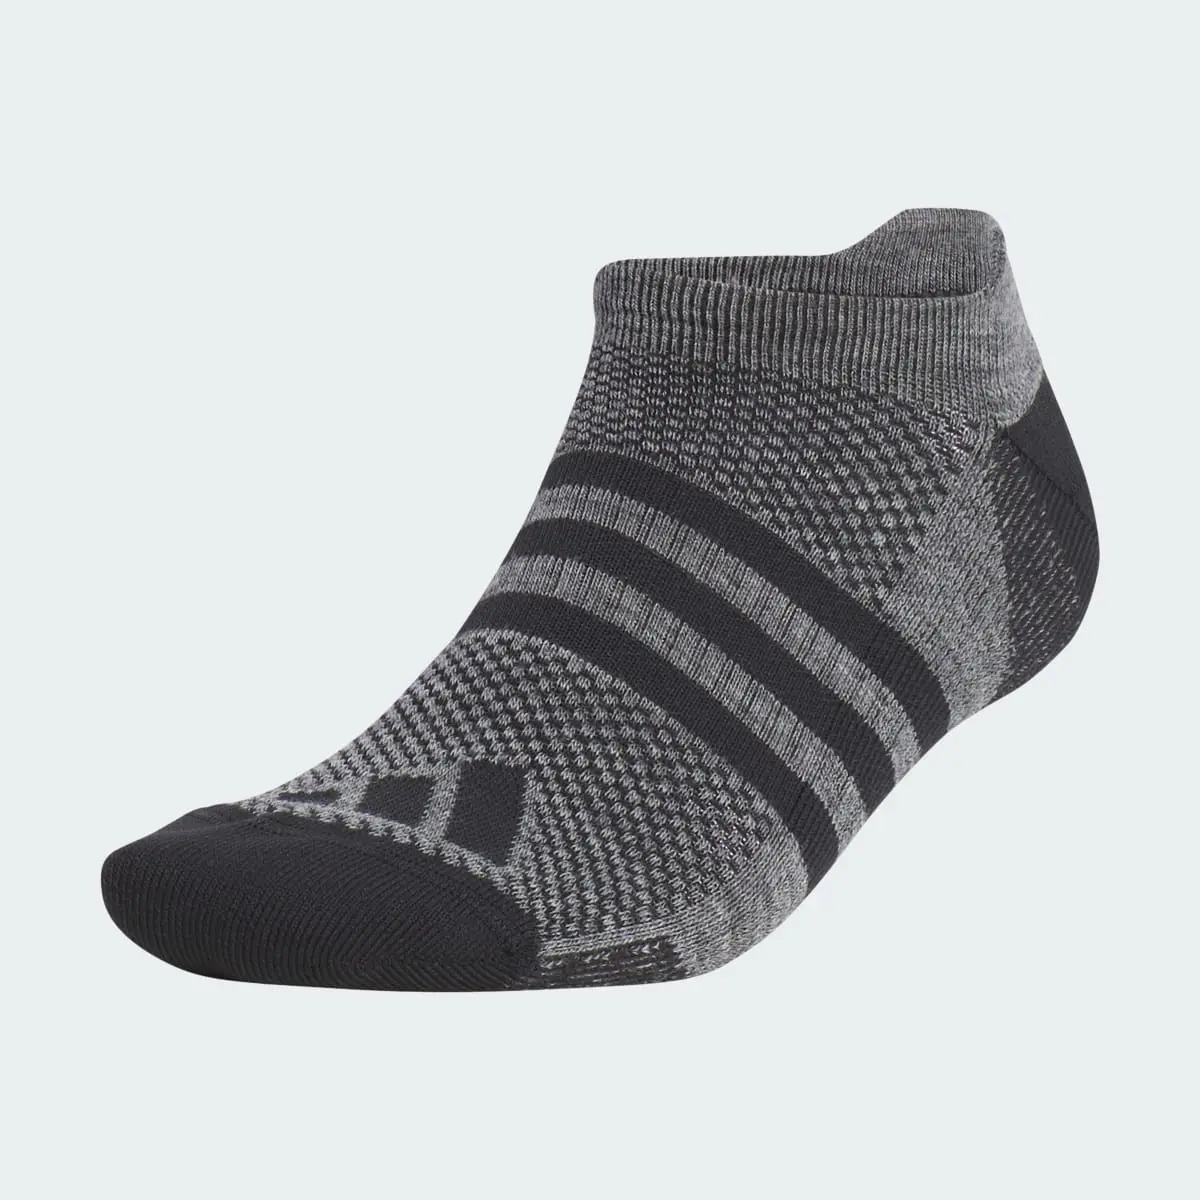 Adidas Wool Low Ankle Socks. 2